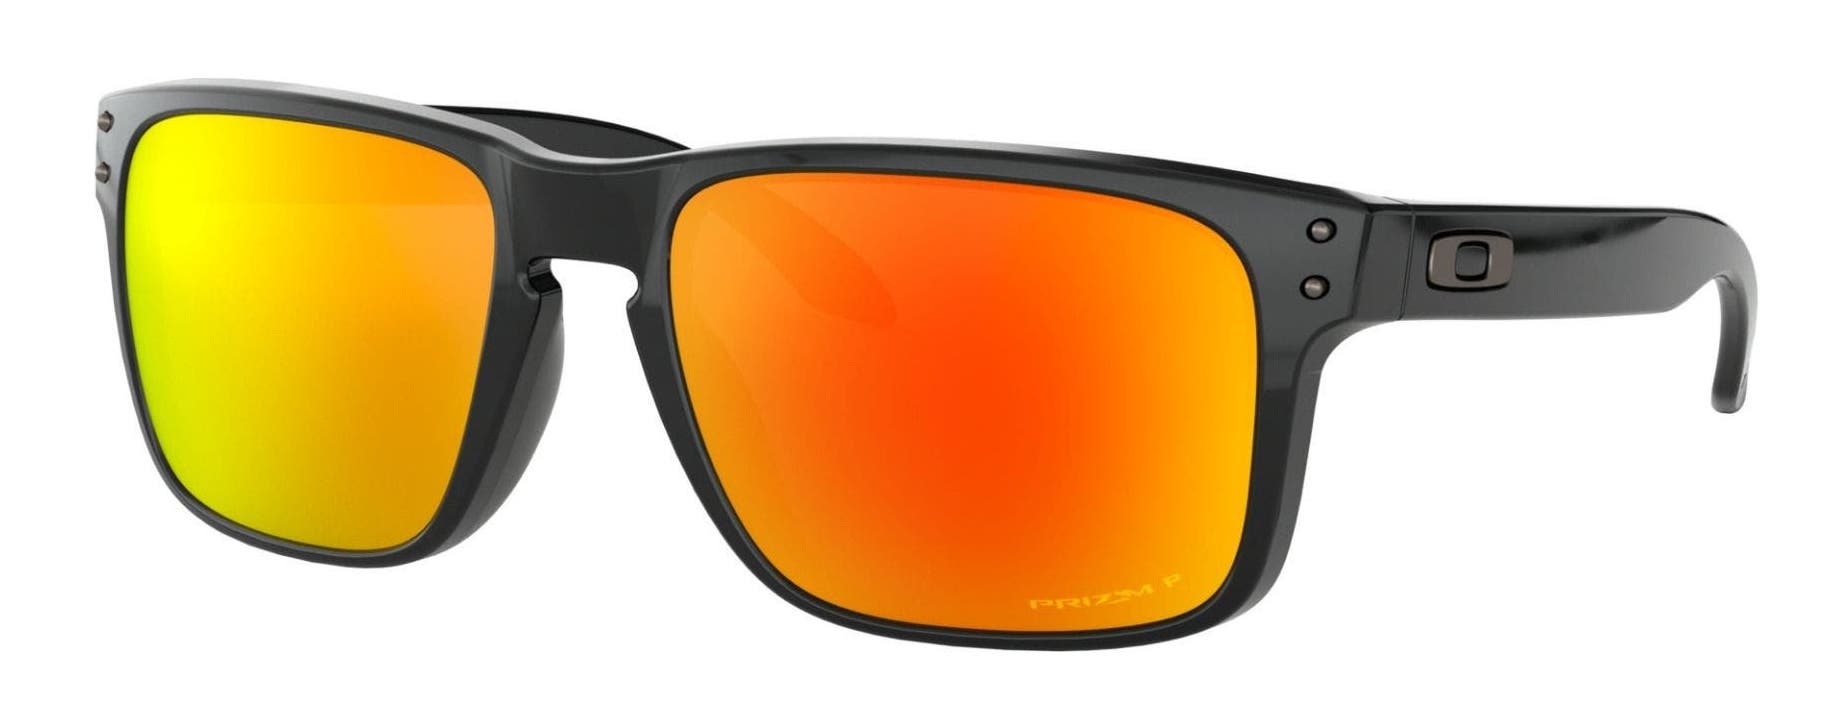 Oakley® Black Friday Sunglasses - Oakley Holbrook polarized prescription sunglasses with black frame and PRIZM ruby lenses.